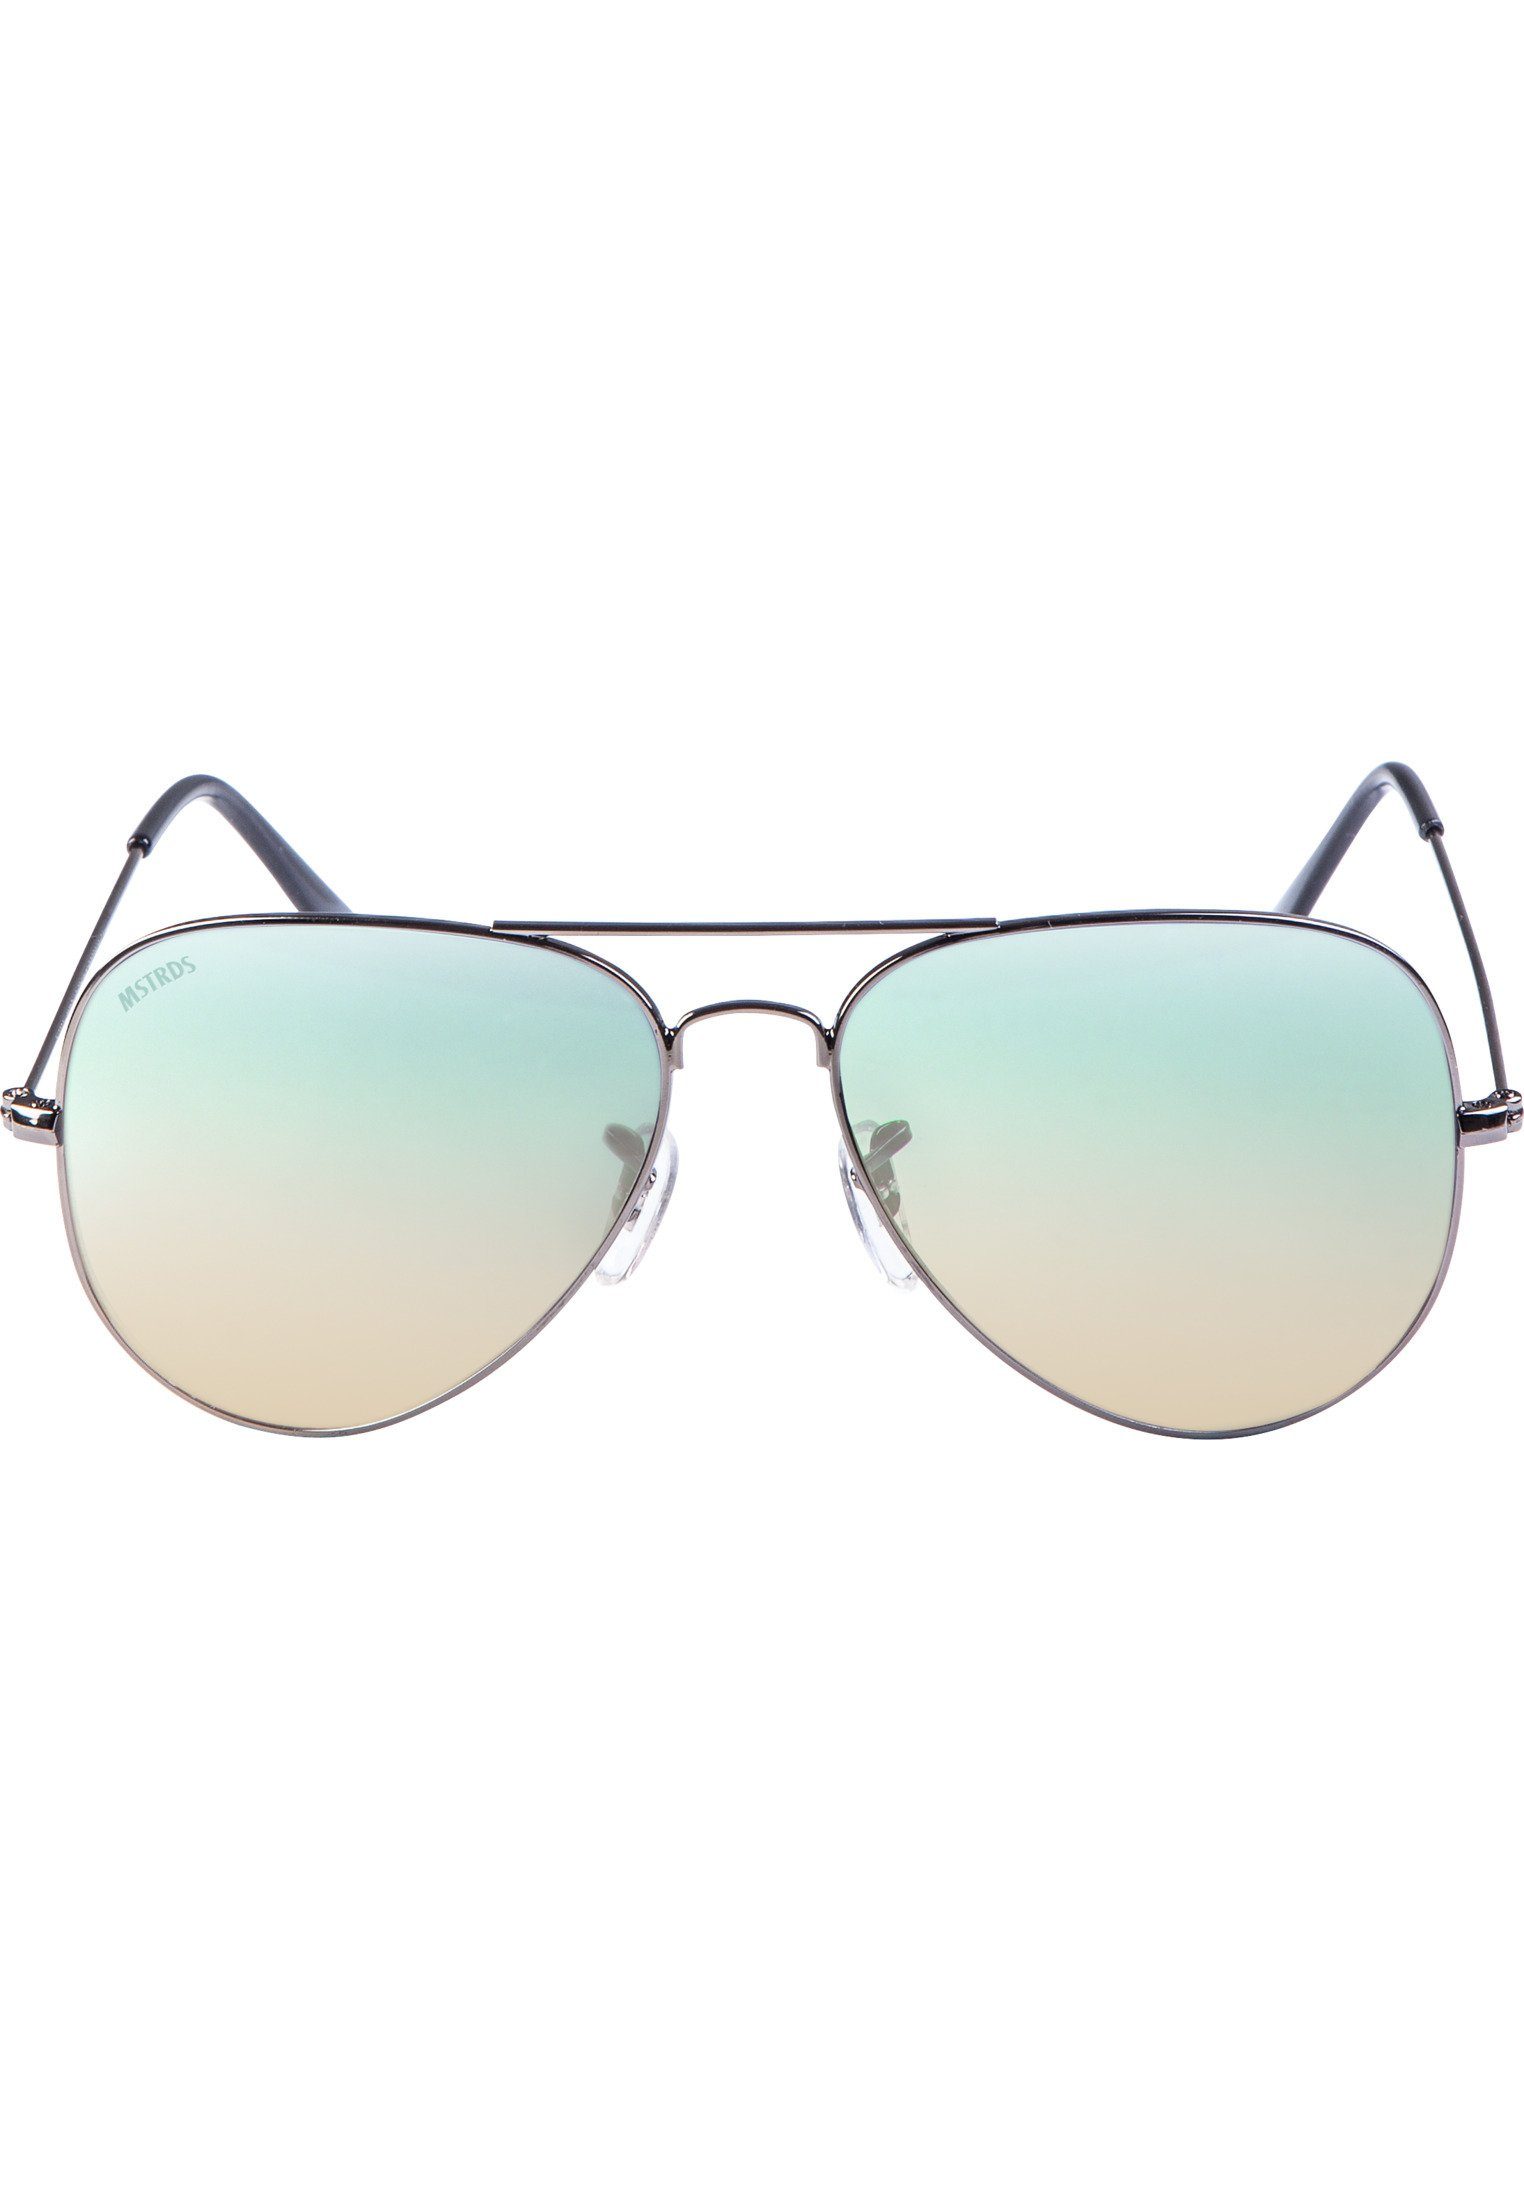 MSTRDS Sonnenbrille Accessoires Sunglasses PureAv gun/blue | Sonnenbrillen